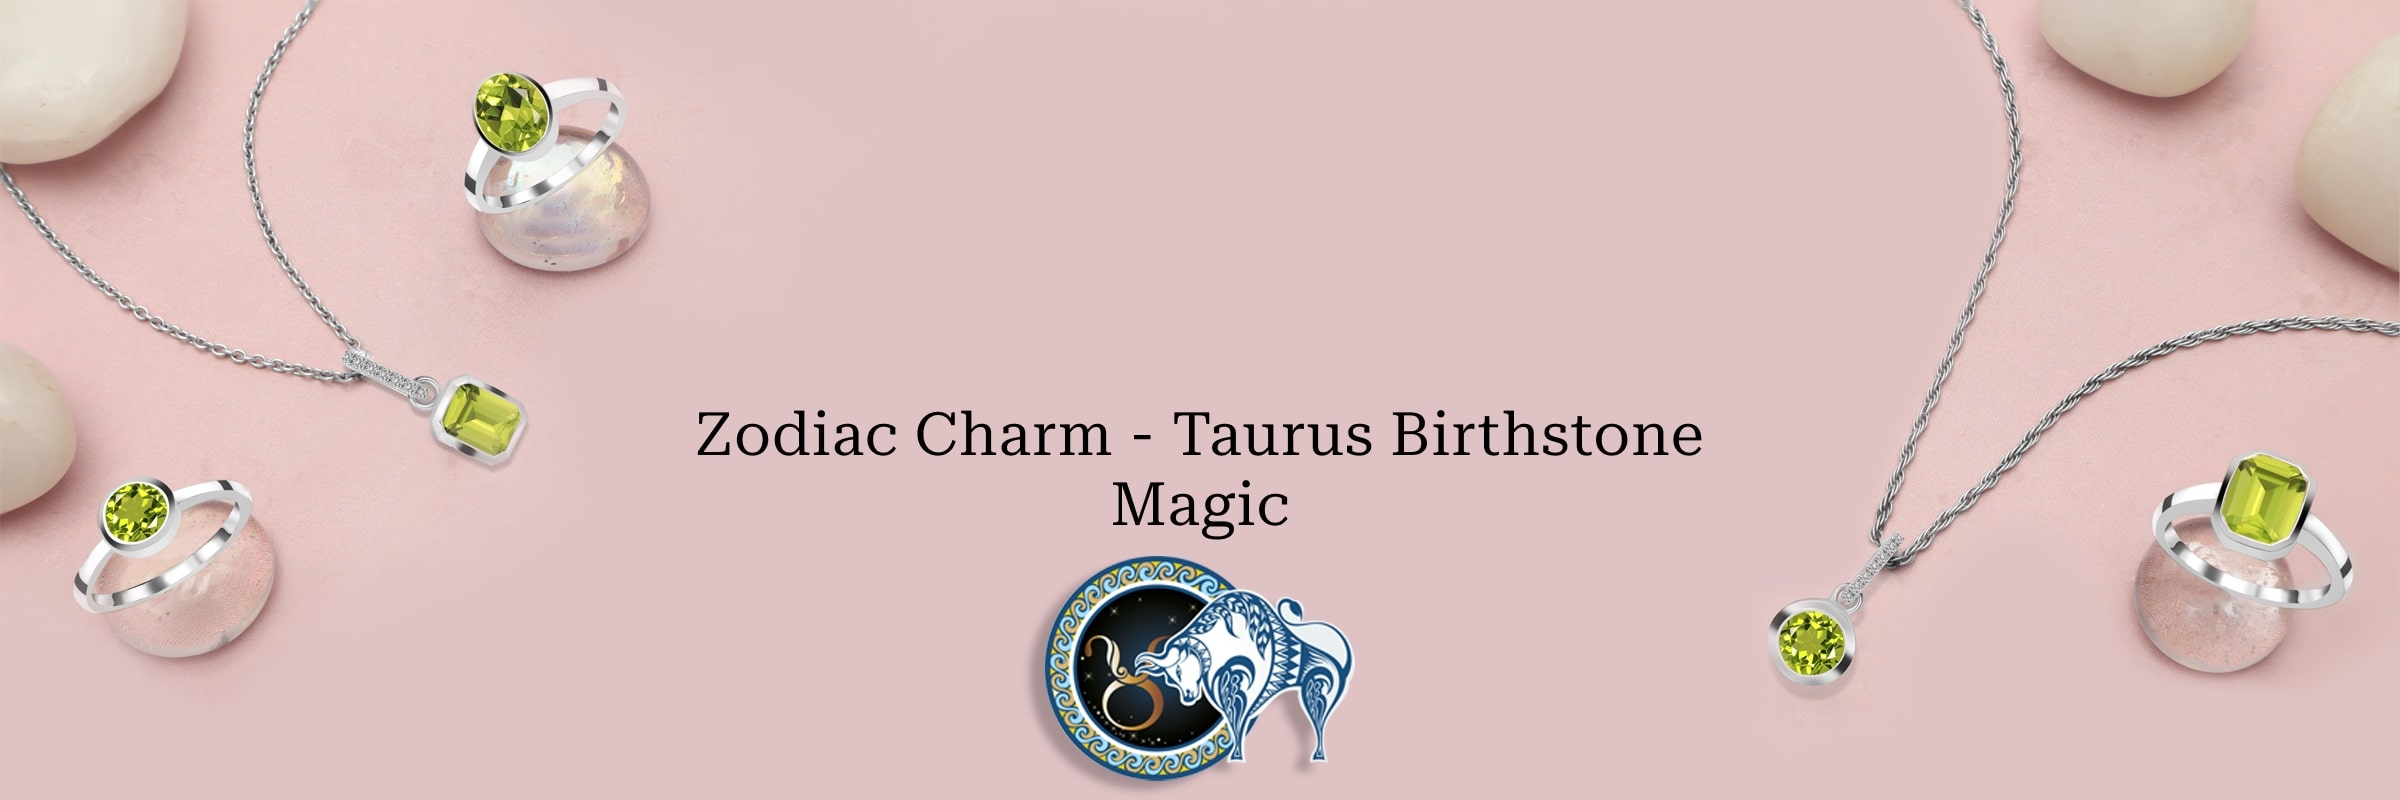 Taurus Birthstone Meanings, Benefits, Uses